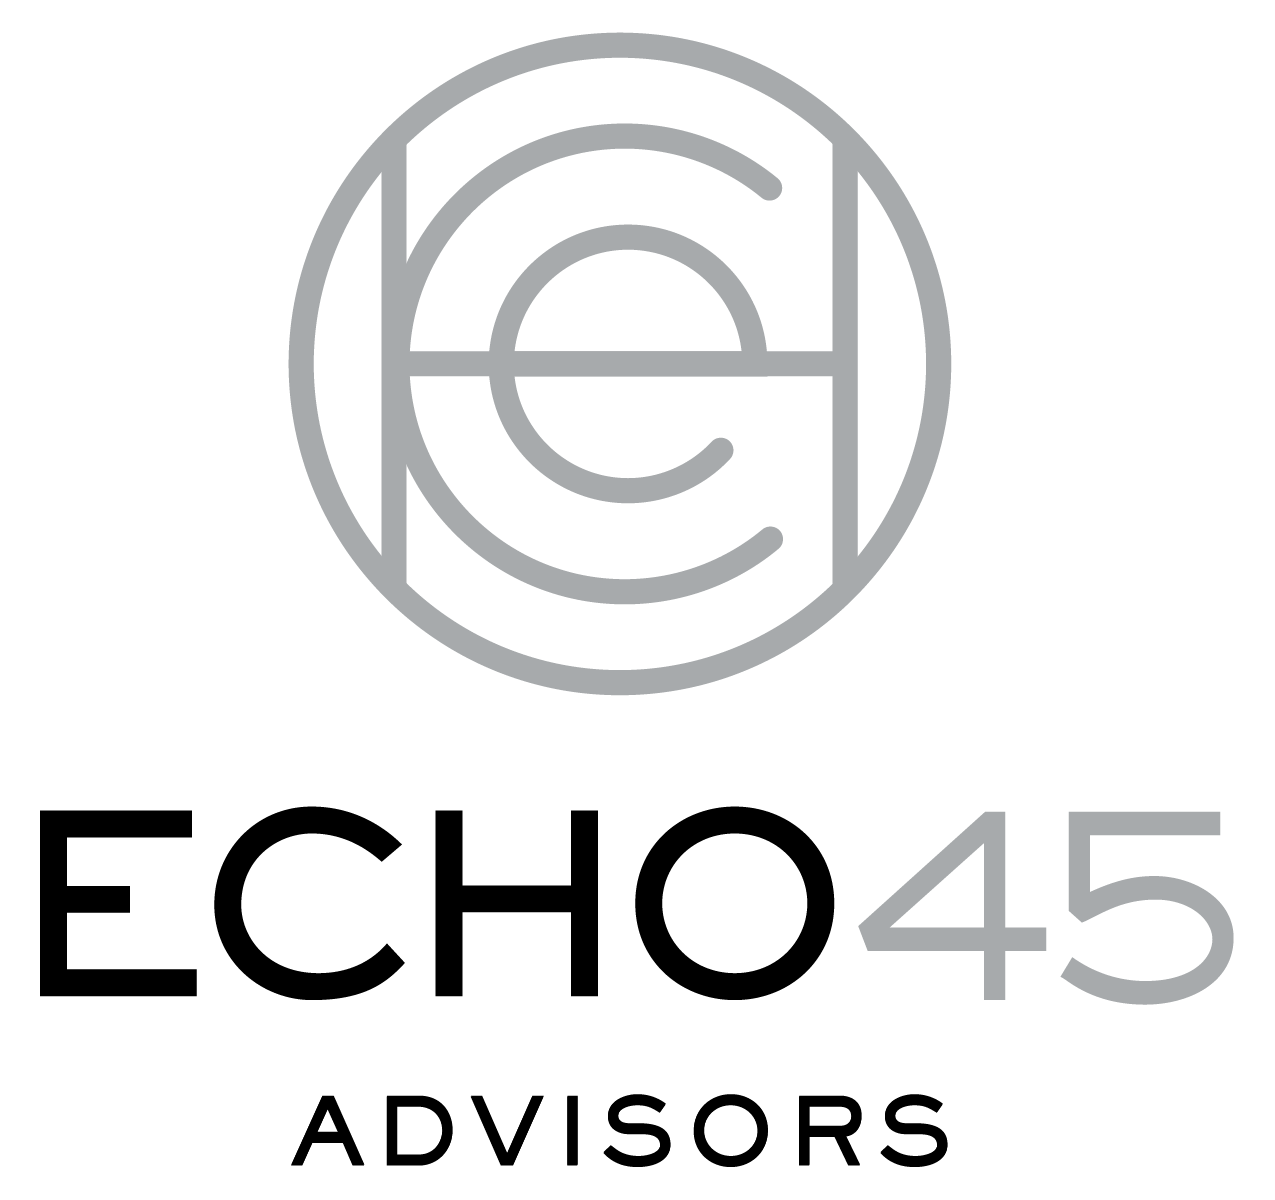 Echo45 Advisors Photo